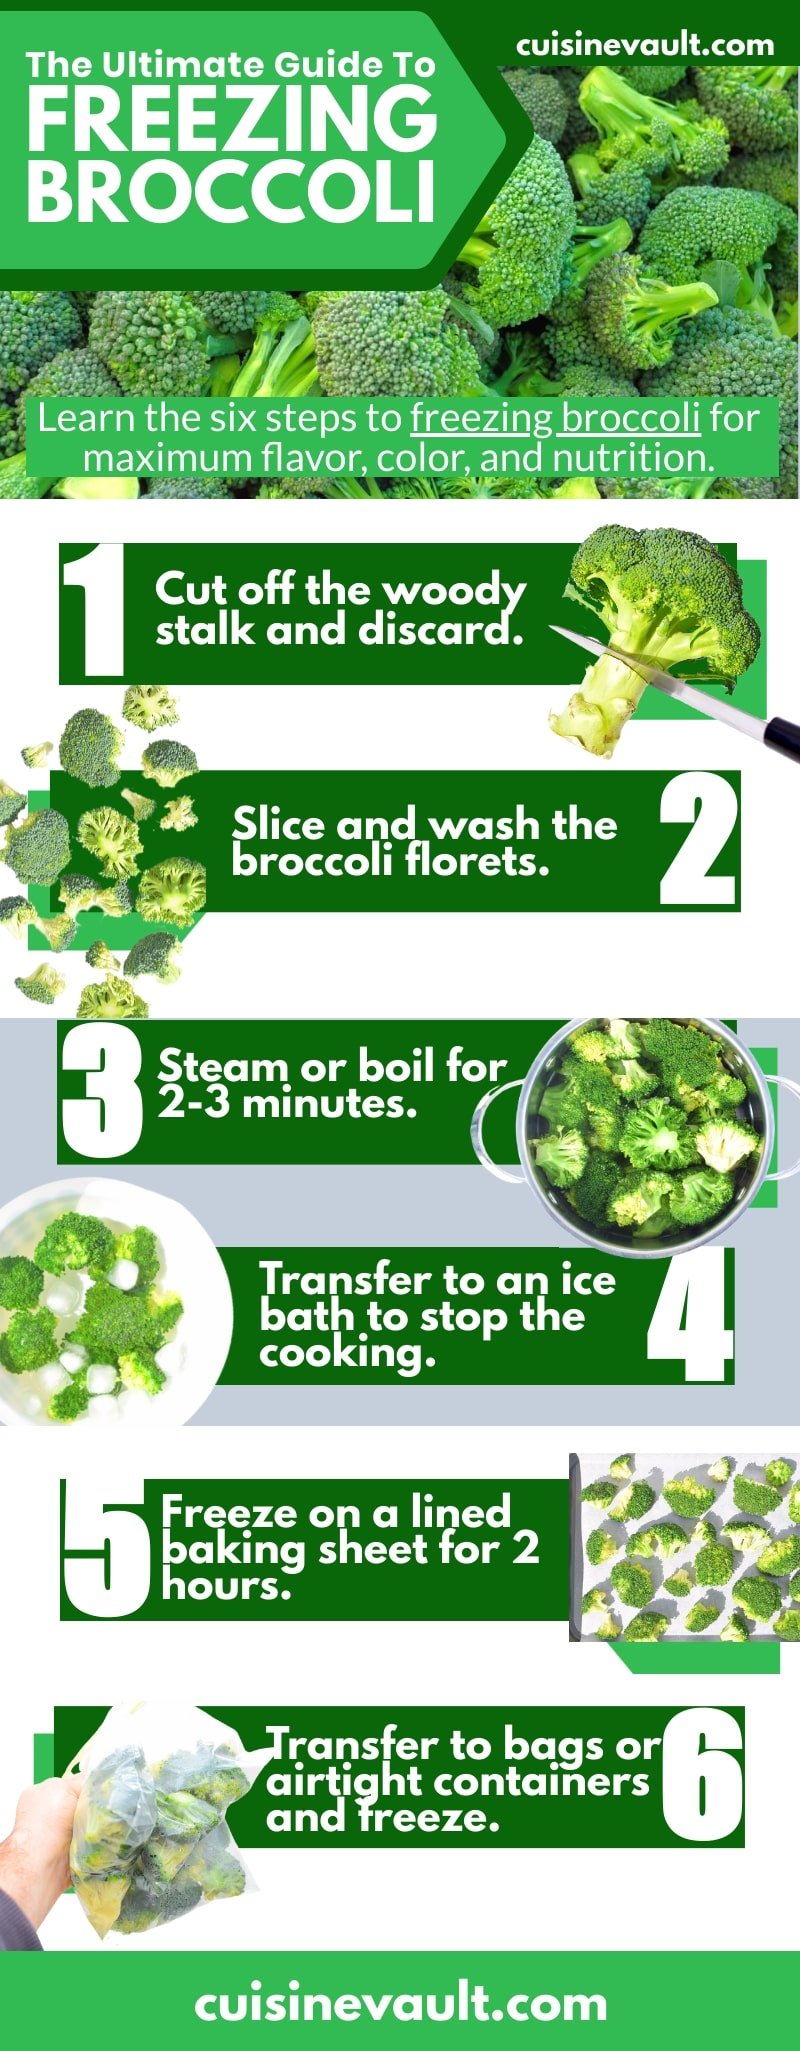 Steps to freeze broccoli infographic